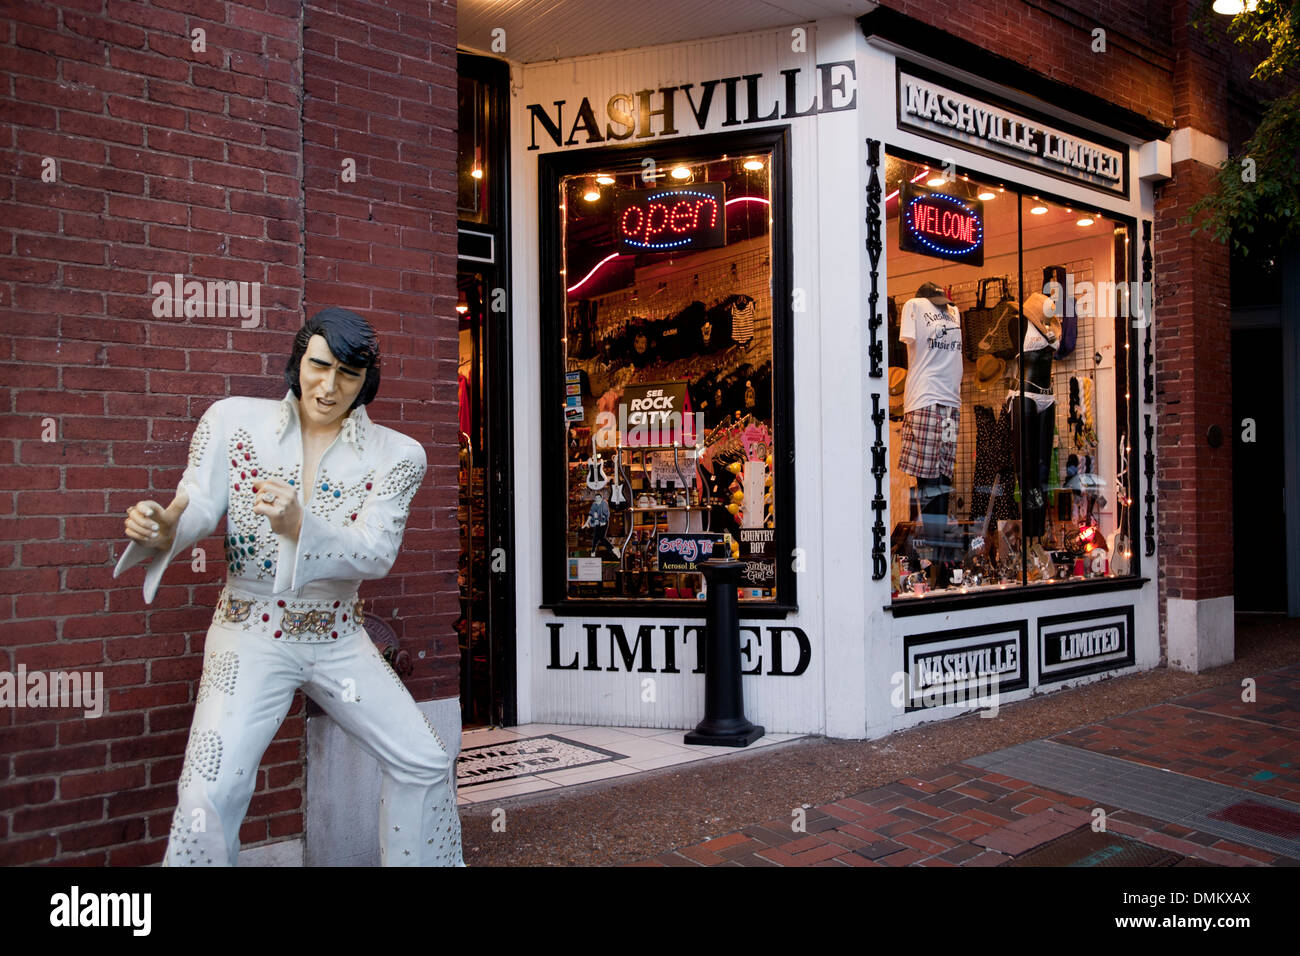 Elvis statue at Nashville Merchant on Second Avenue, Nashville, Tennessee Stock Photo